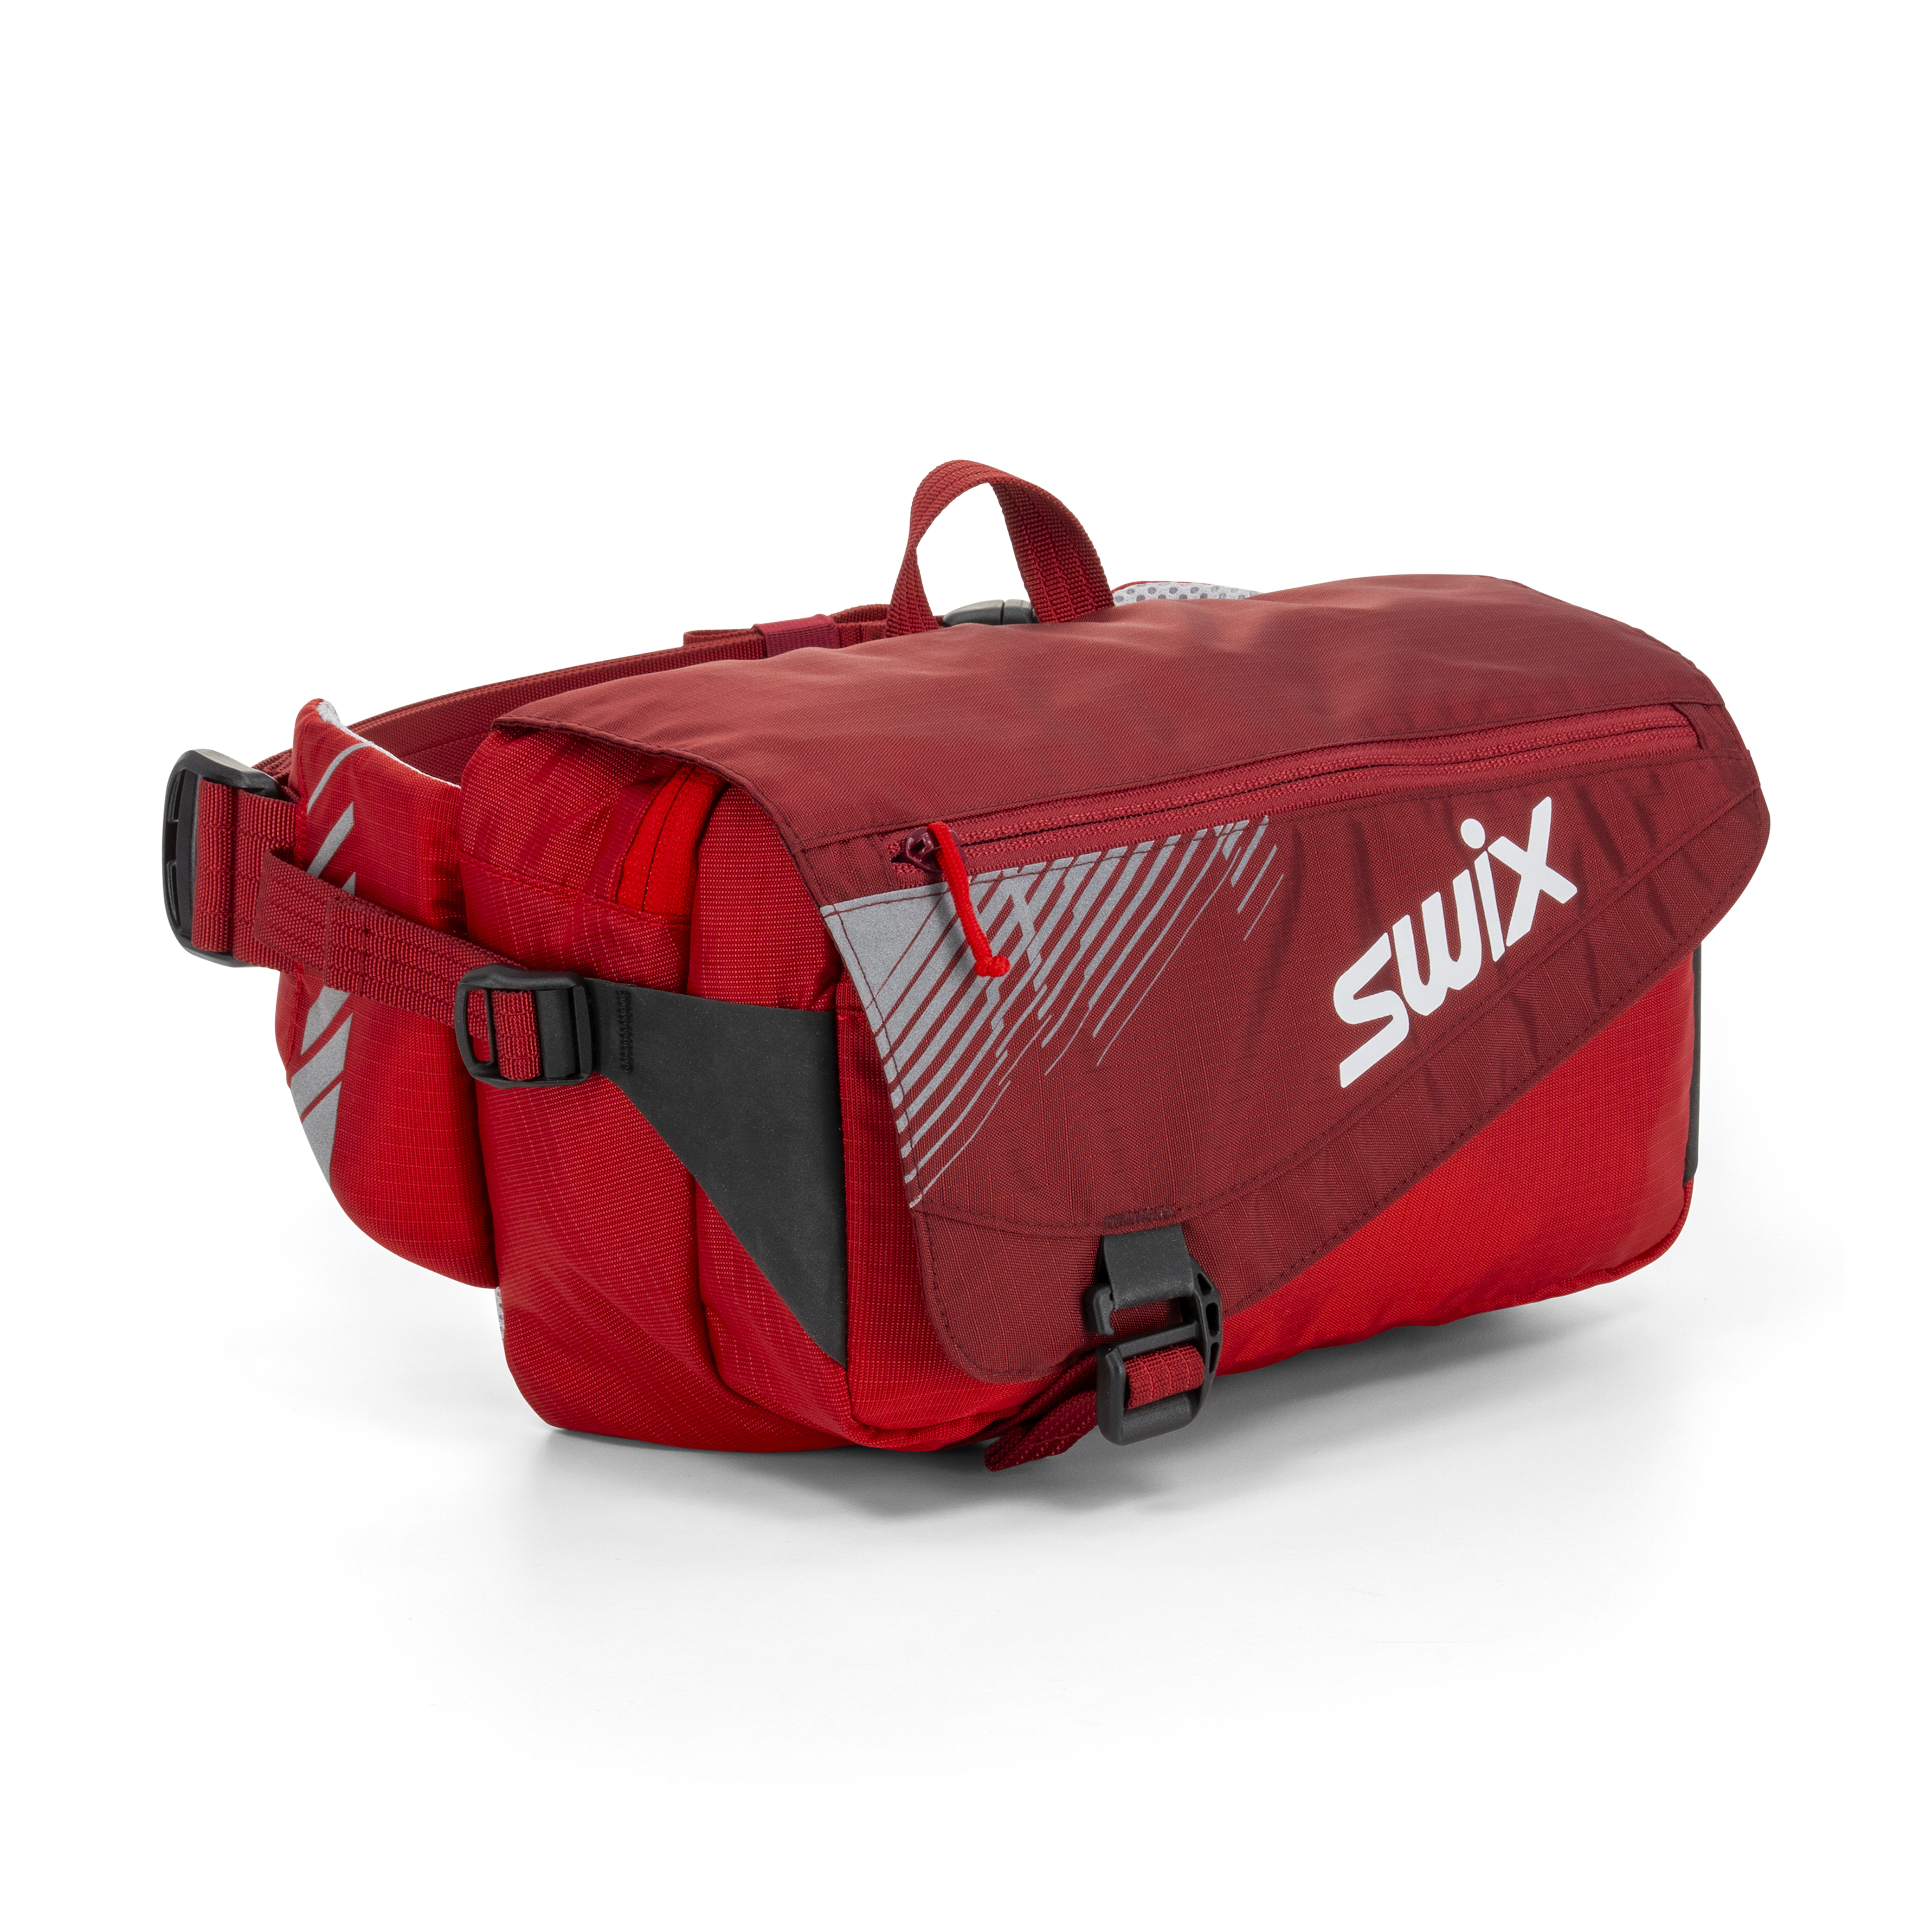 Packs and Bags | Swix